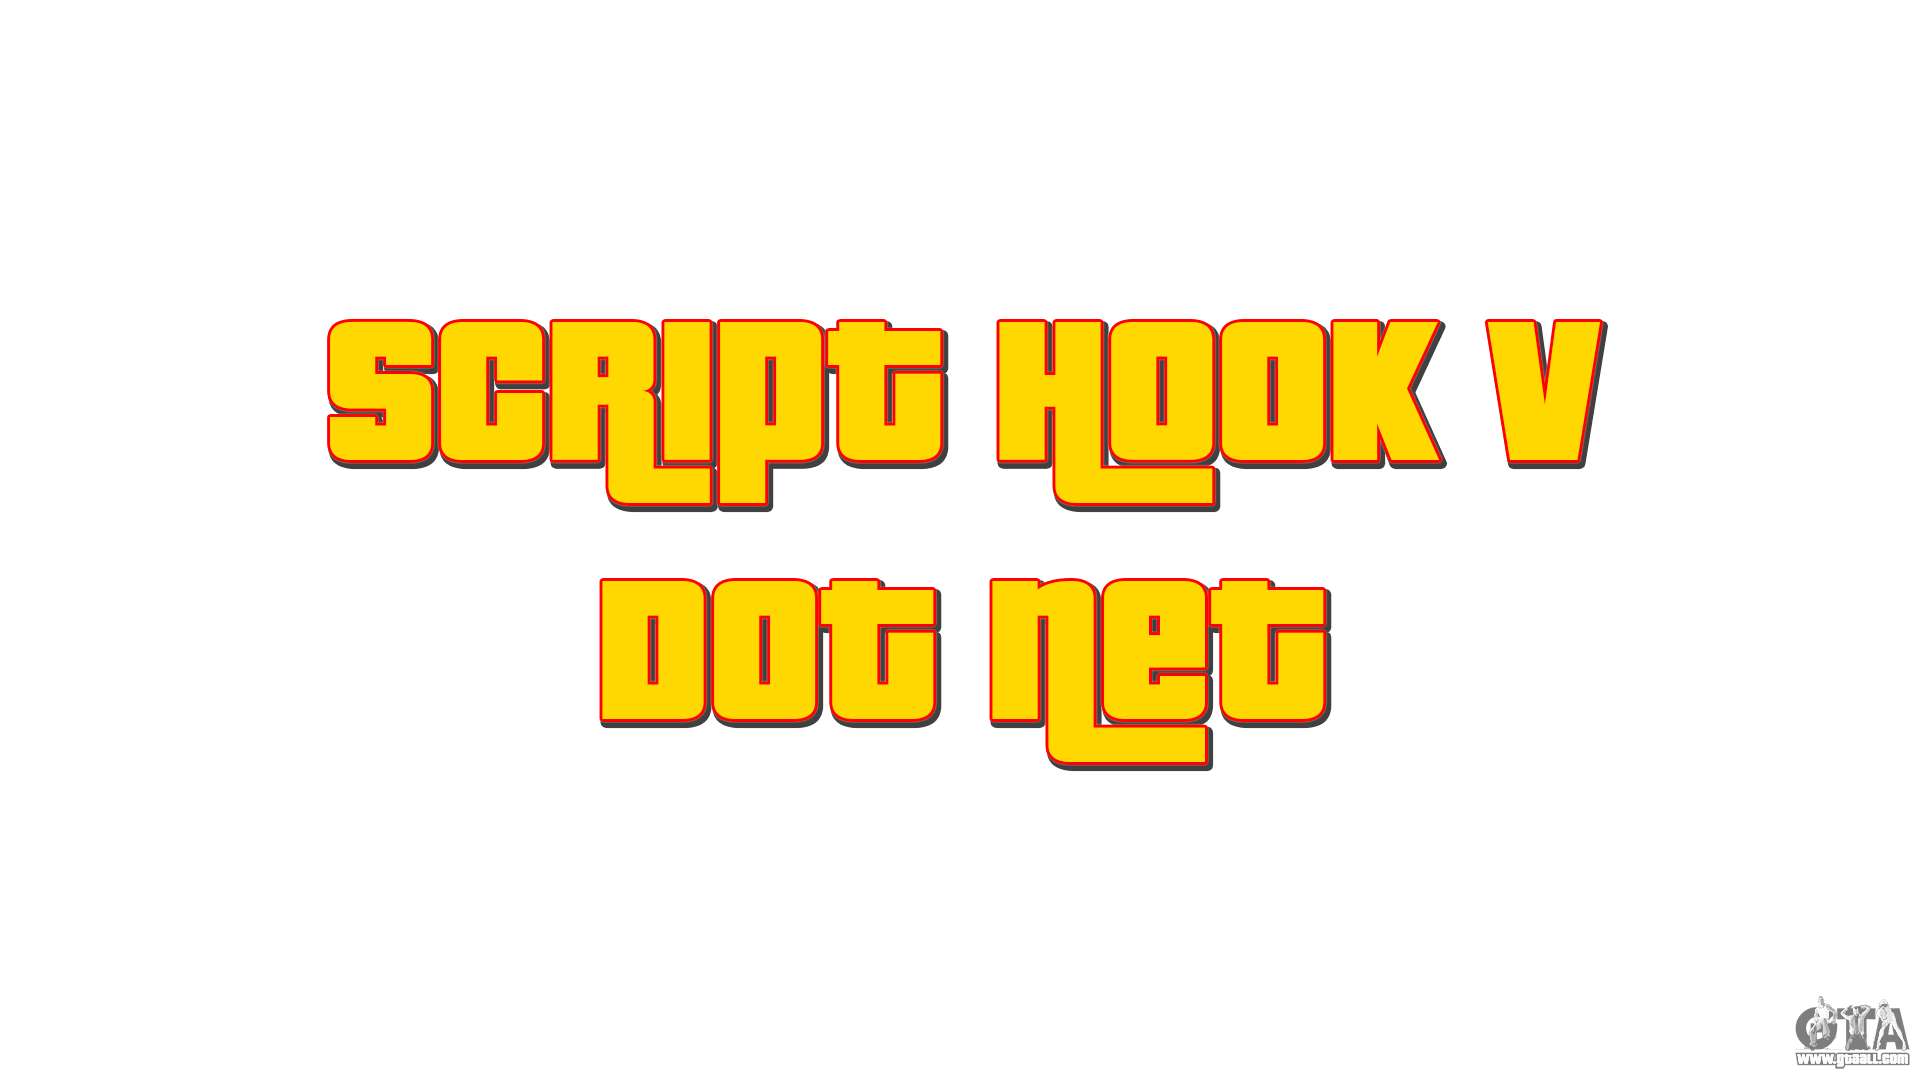 script hook